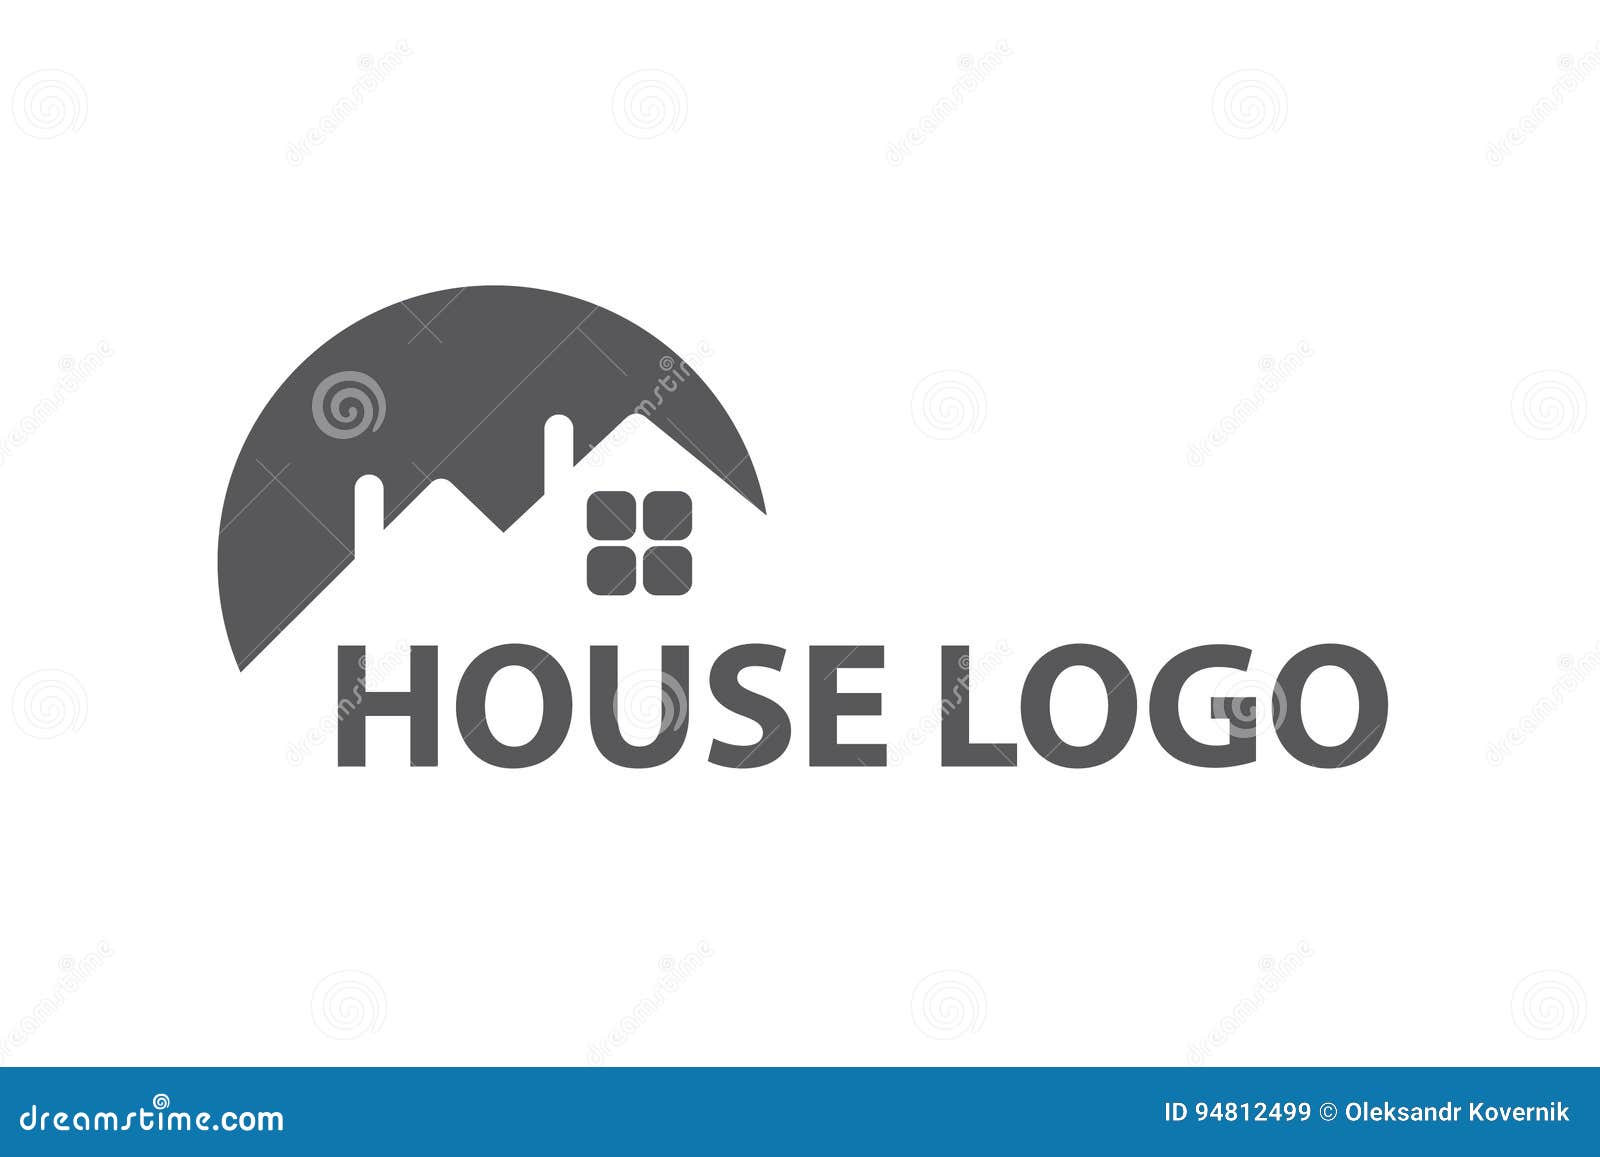 monochrome house logo